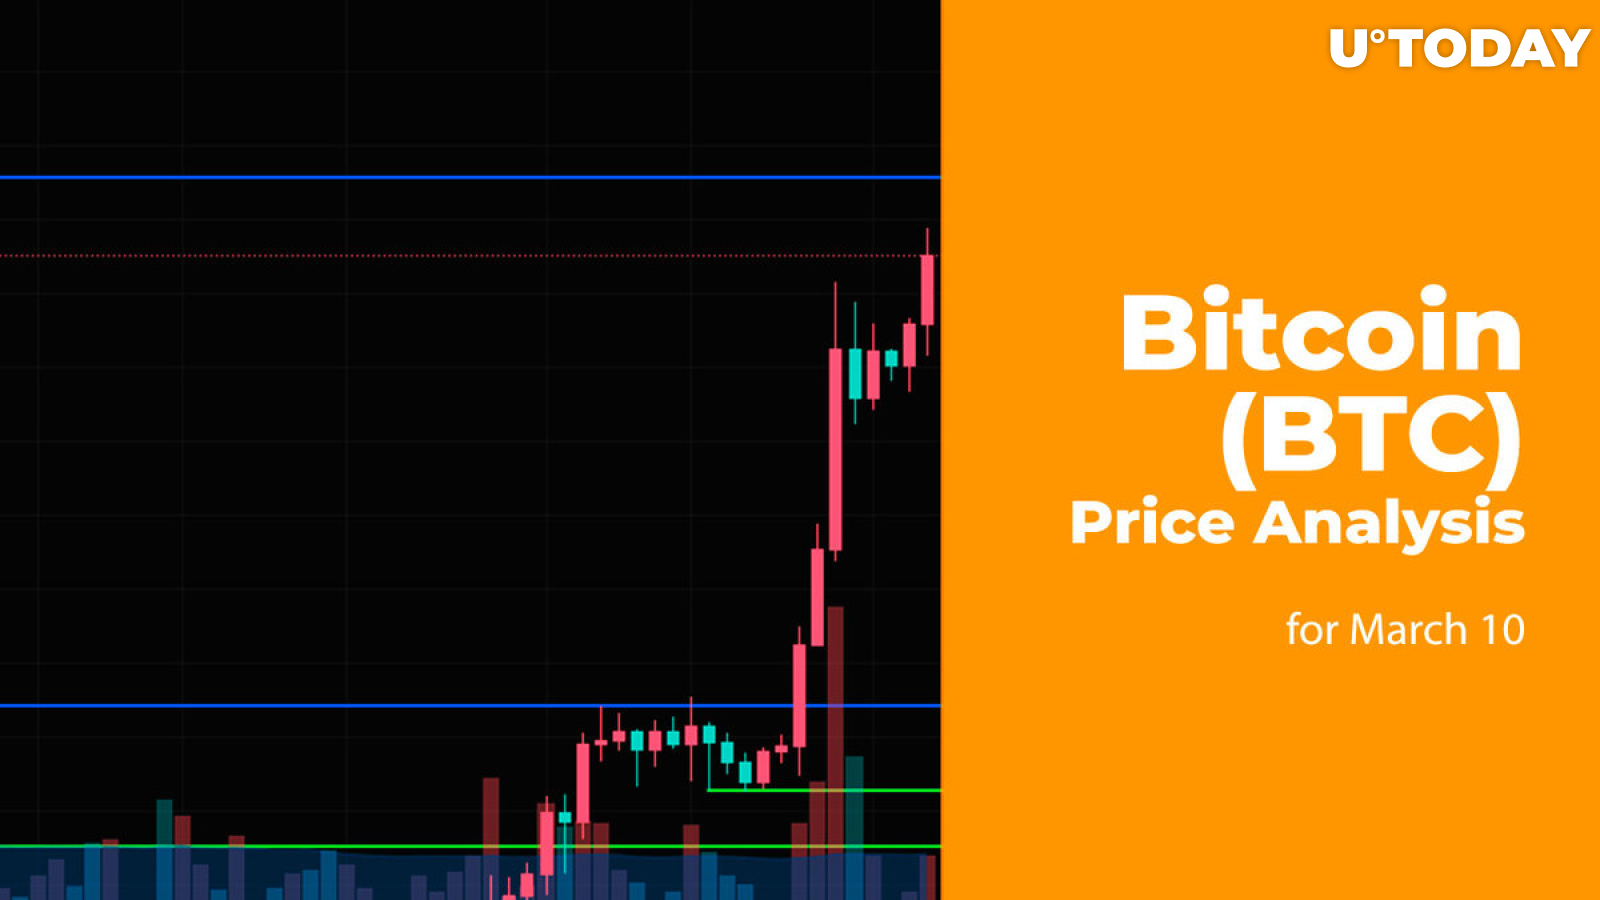 Bitcoin (BTC) Price Prediction for March 10